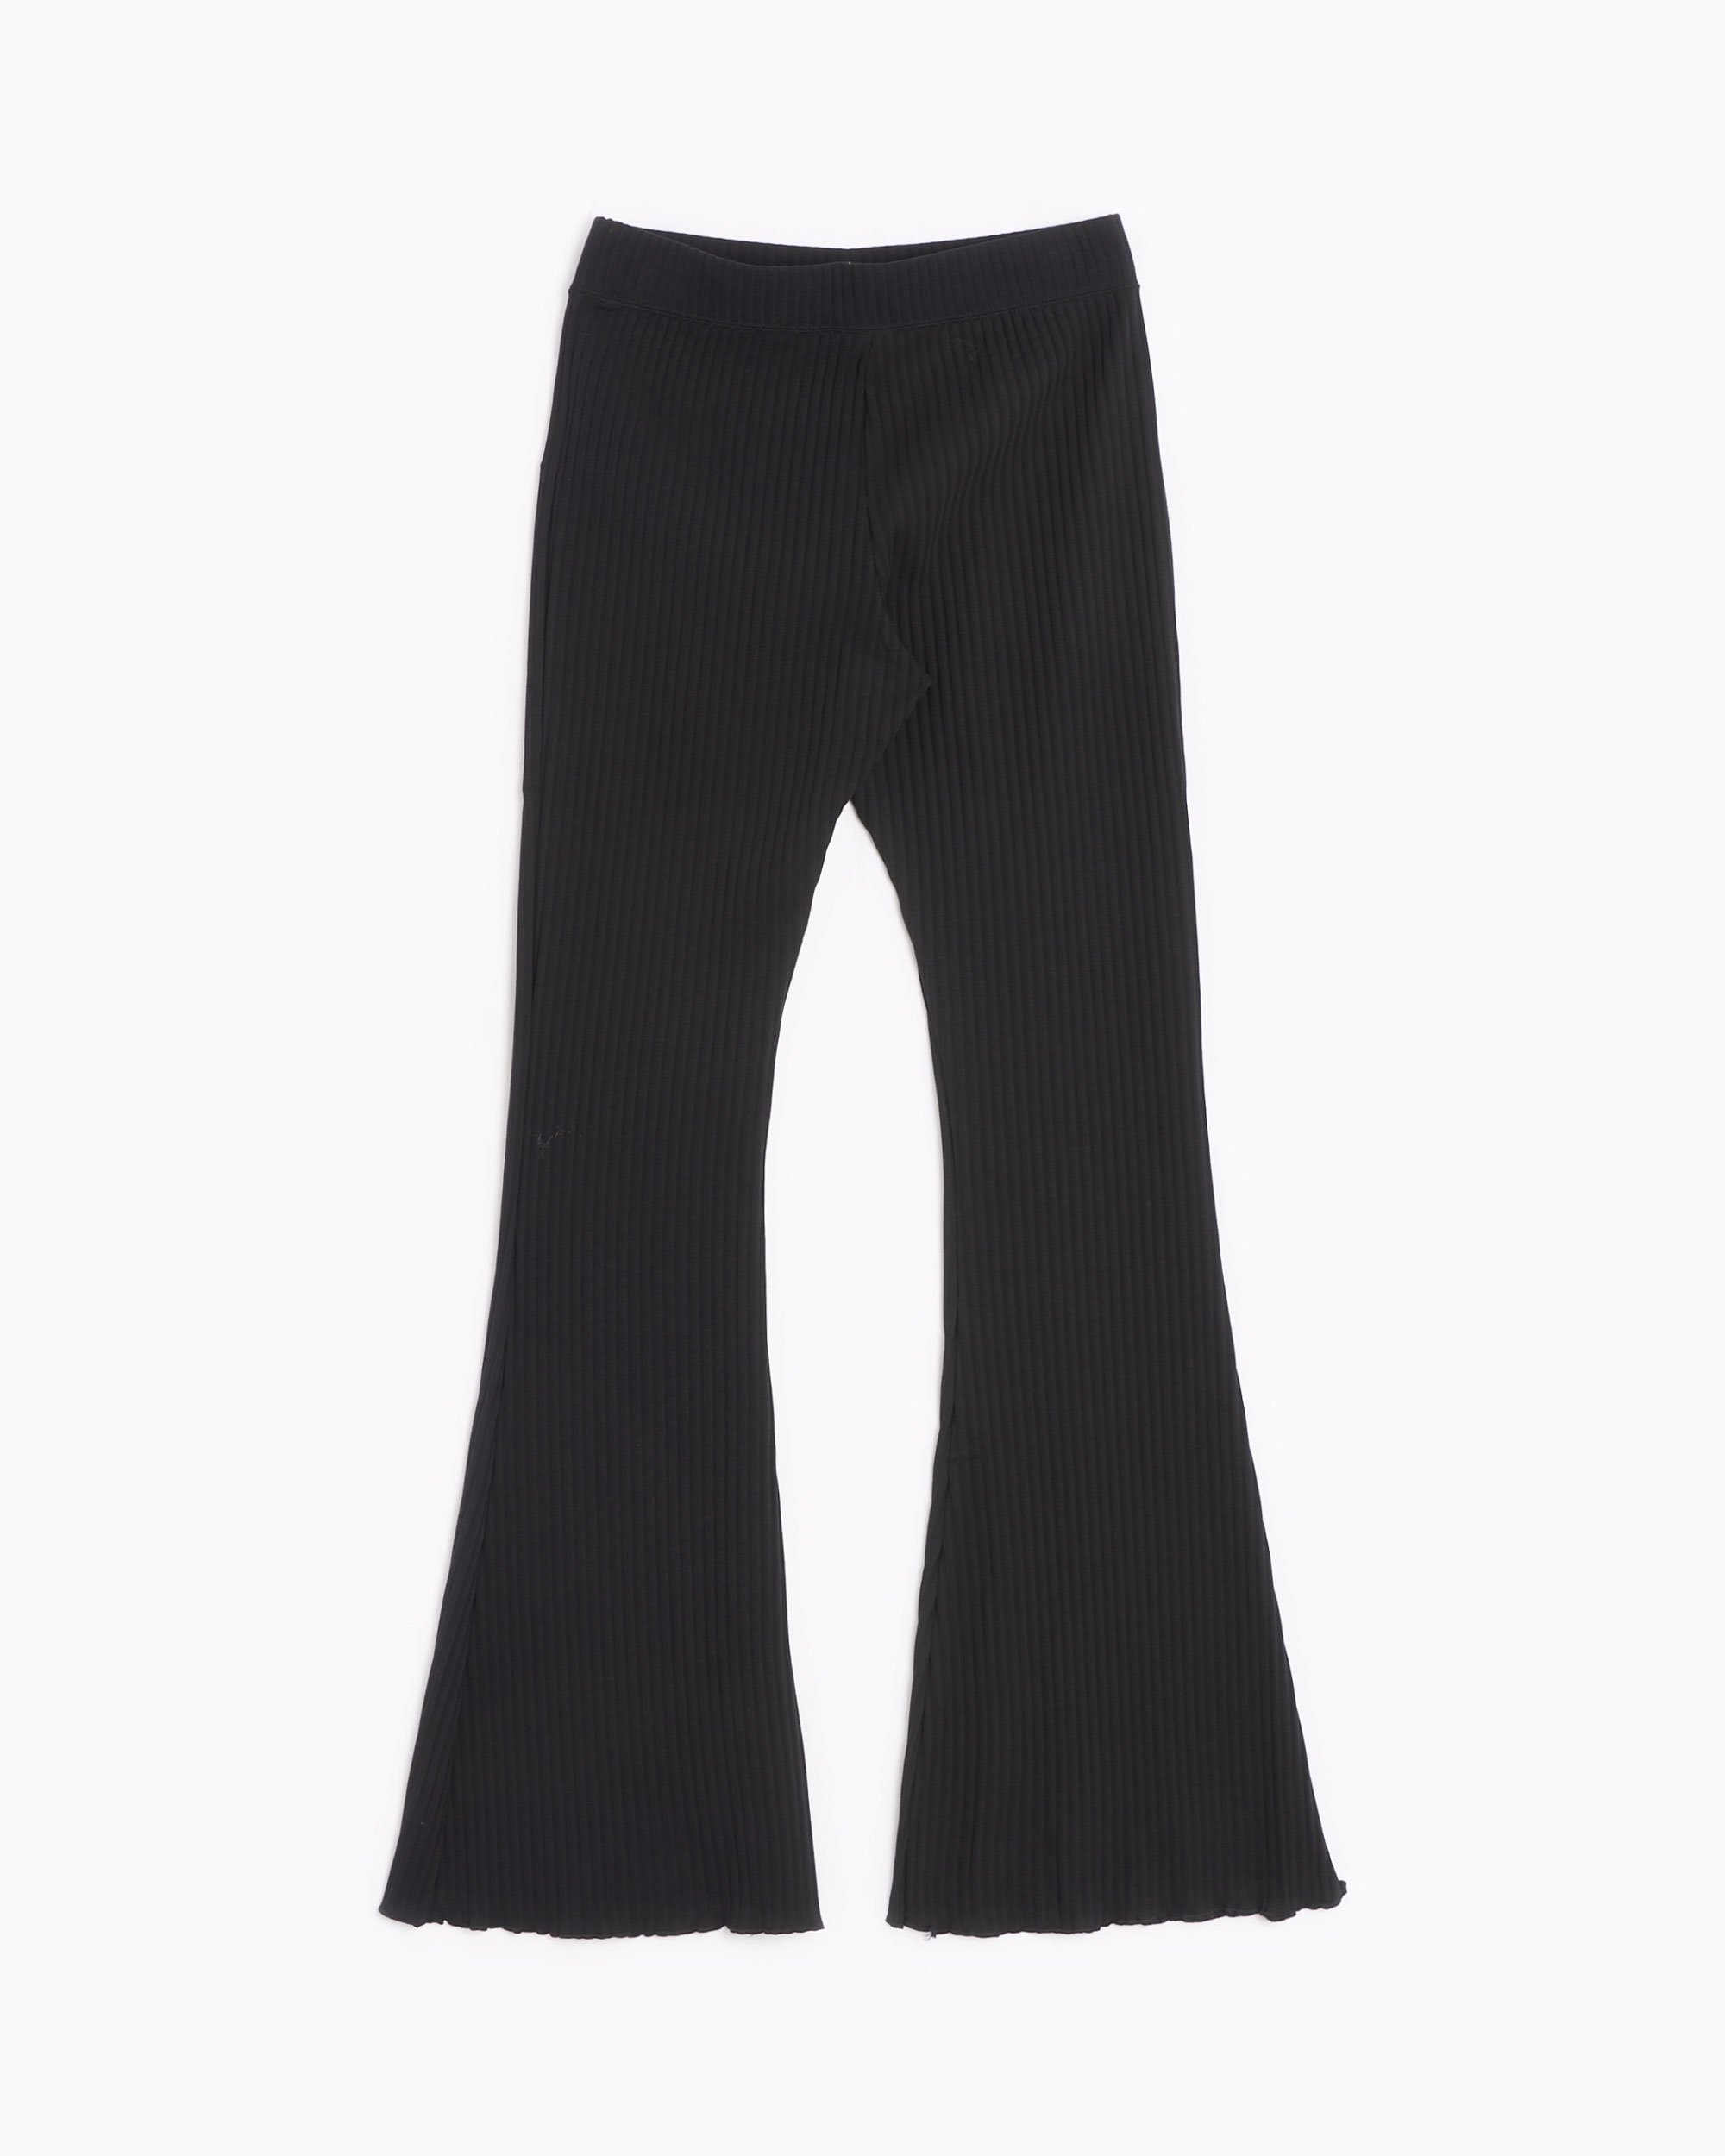 Nike Sportswear Women's High Waisted Ribbed Pants Black DV7868-010| Buy ...